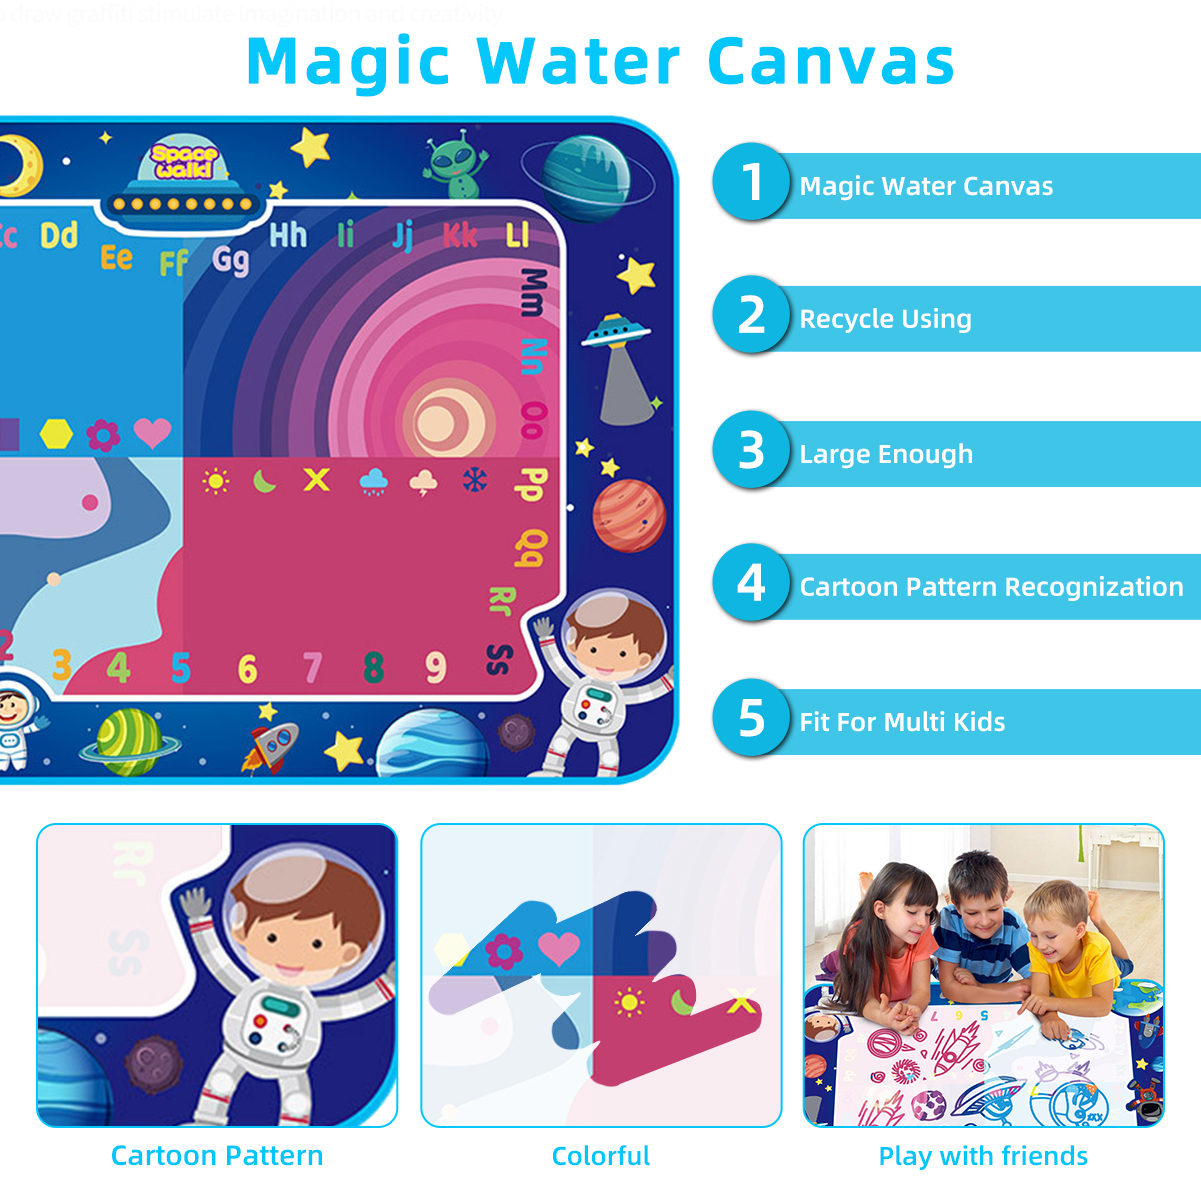 Buy Chad Valley Aqua Magic Mat, Drawing and painting toys